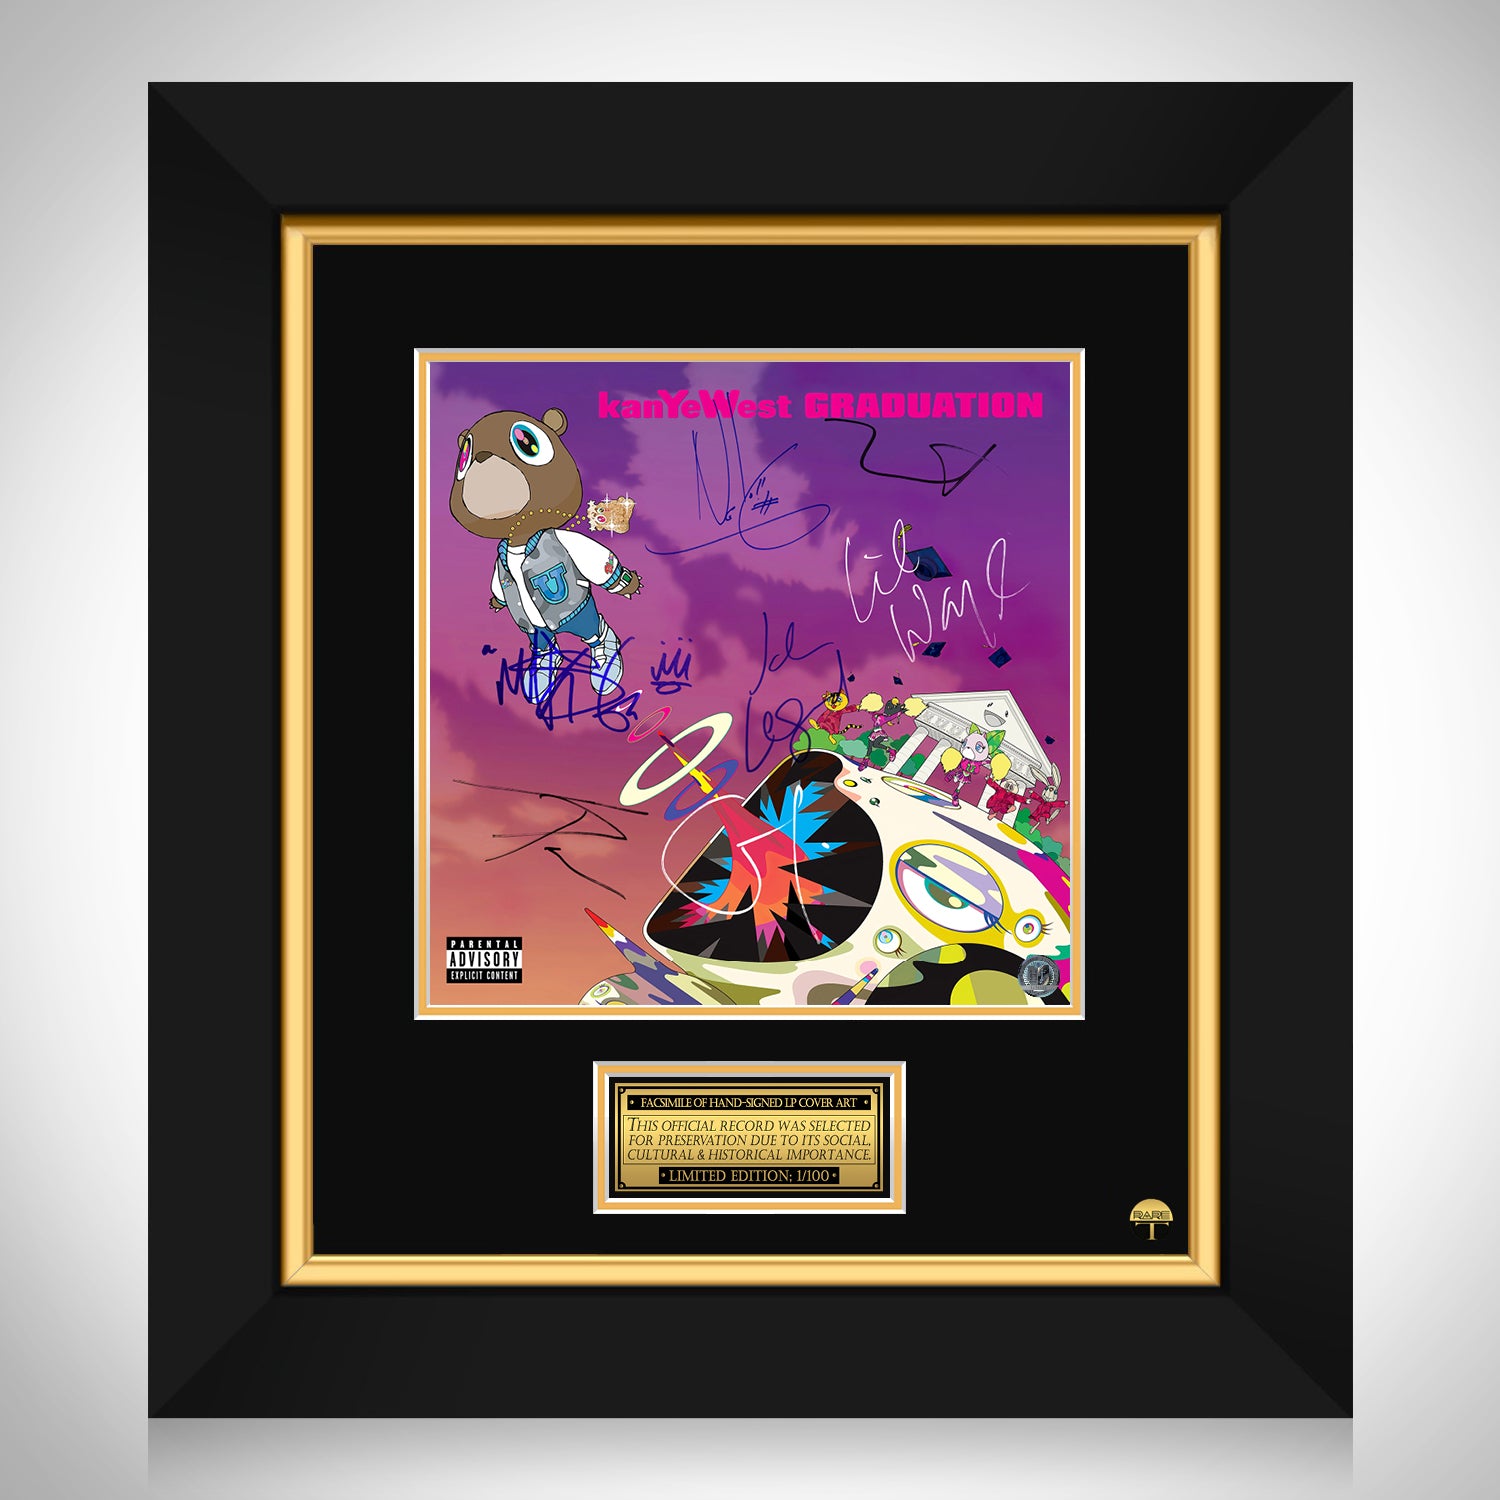 Kanye West - Graduation Gold LP Limited Signature Edition Custom